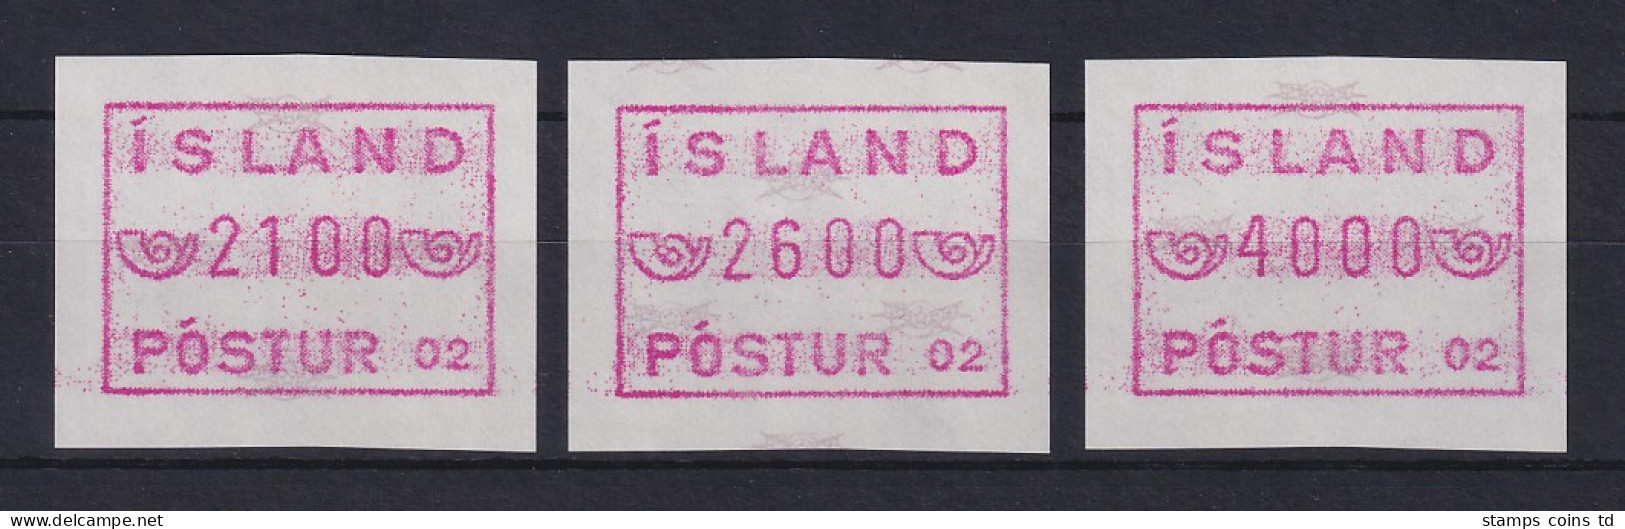 Island Frama-ATM  Aut.-Nr. 02, Mi.-Nr. 1.2 D Satz 2100-2600-4000 ** (1989) - Vignettes D'affranchissement (Frama)